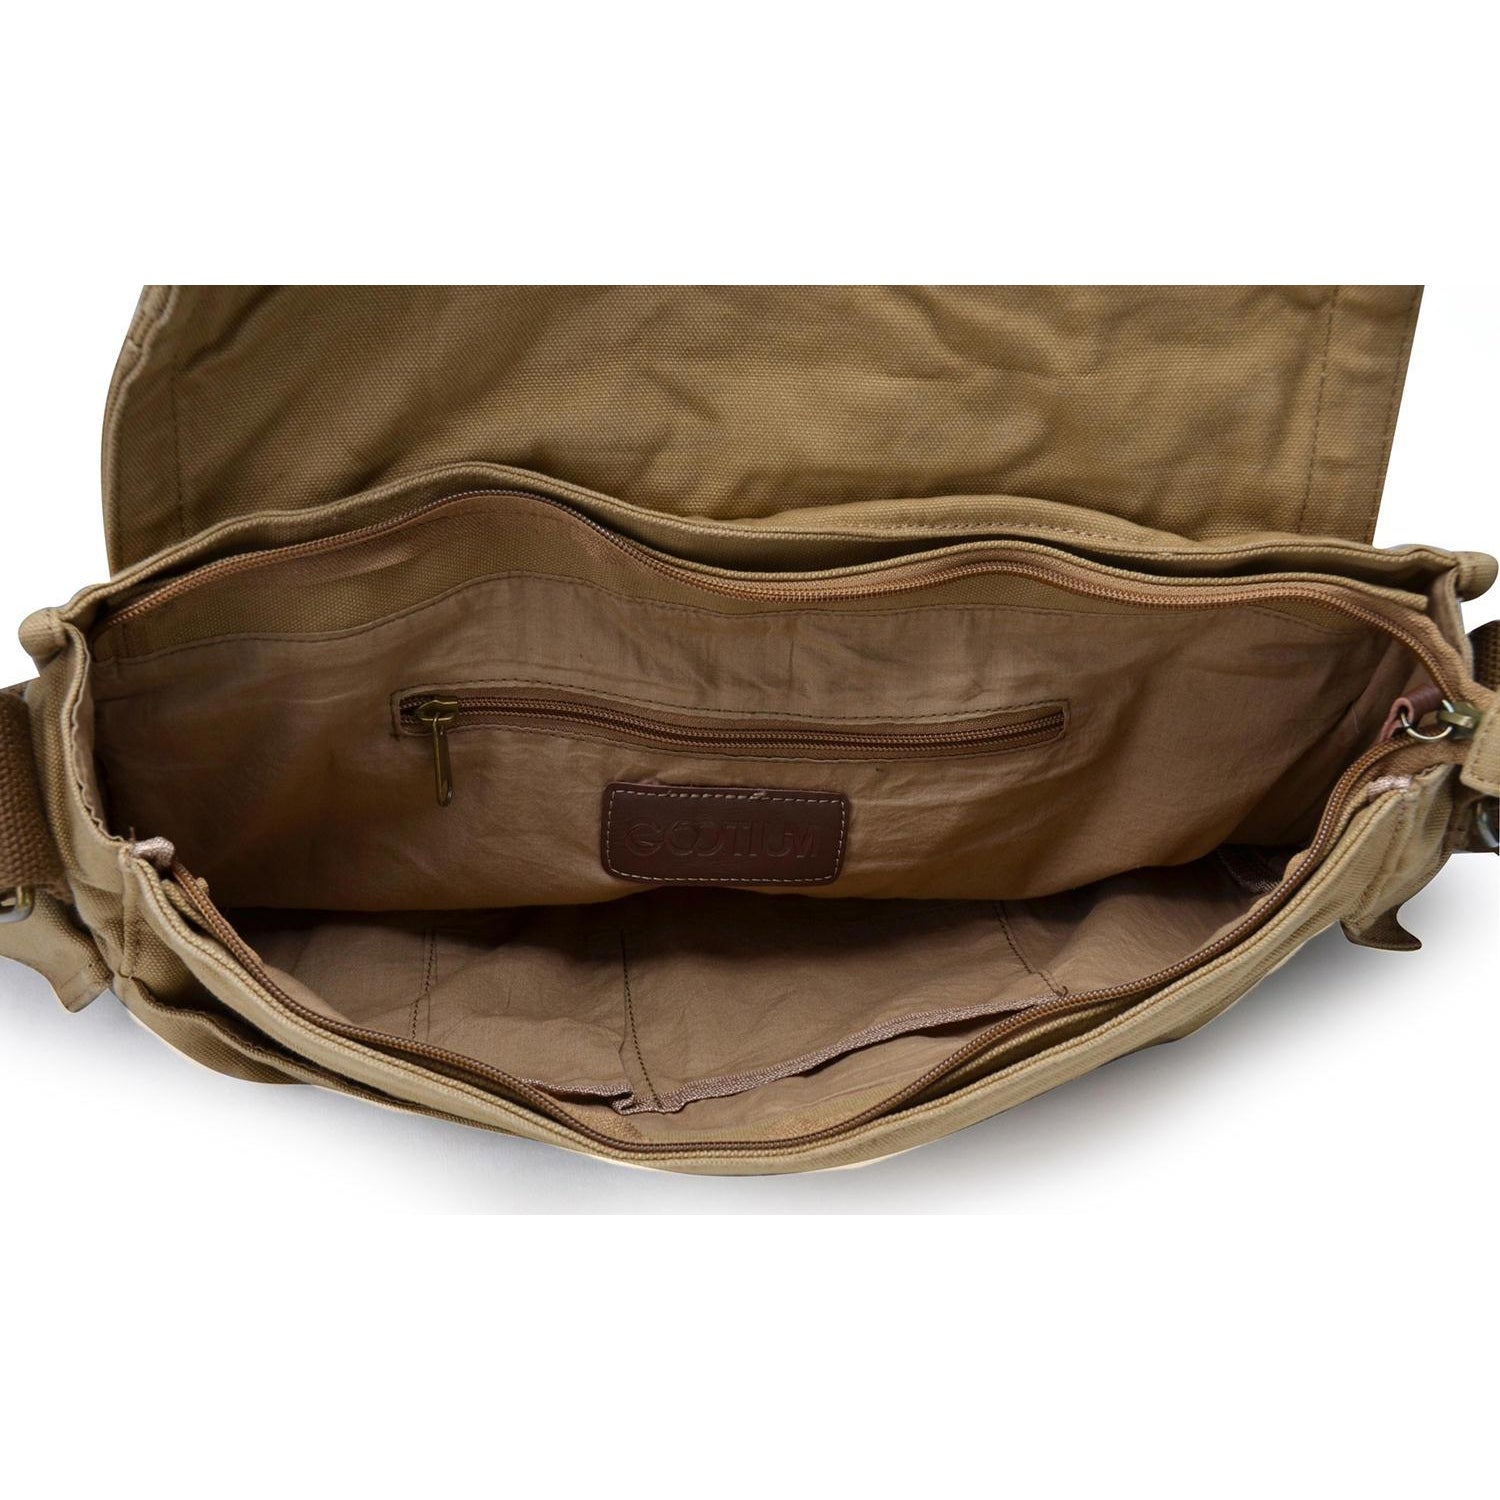 Gootium Canvas Messenger Bag Small Vintage Shoulder Purse Crossbody Satchel